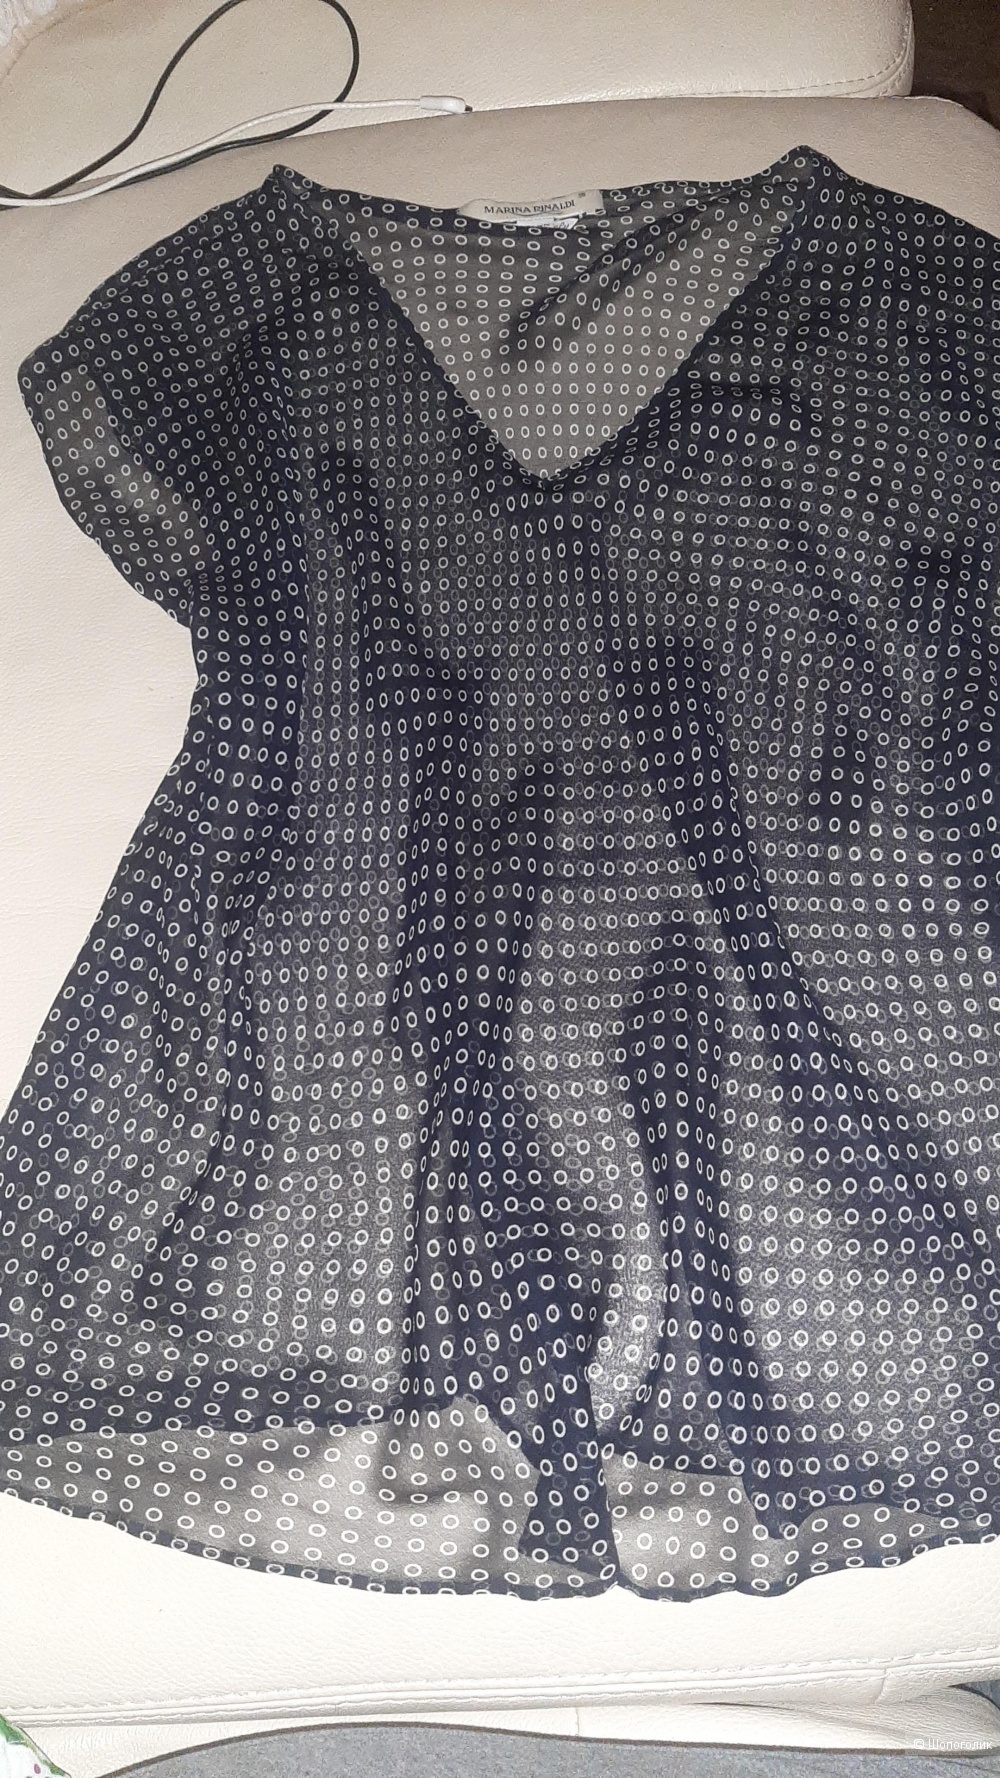 Шелковая блуза Marina Rinaldi, 25 на 50-56